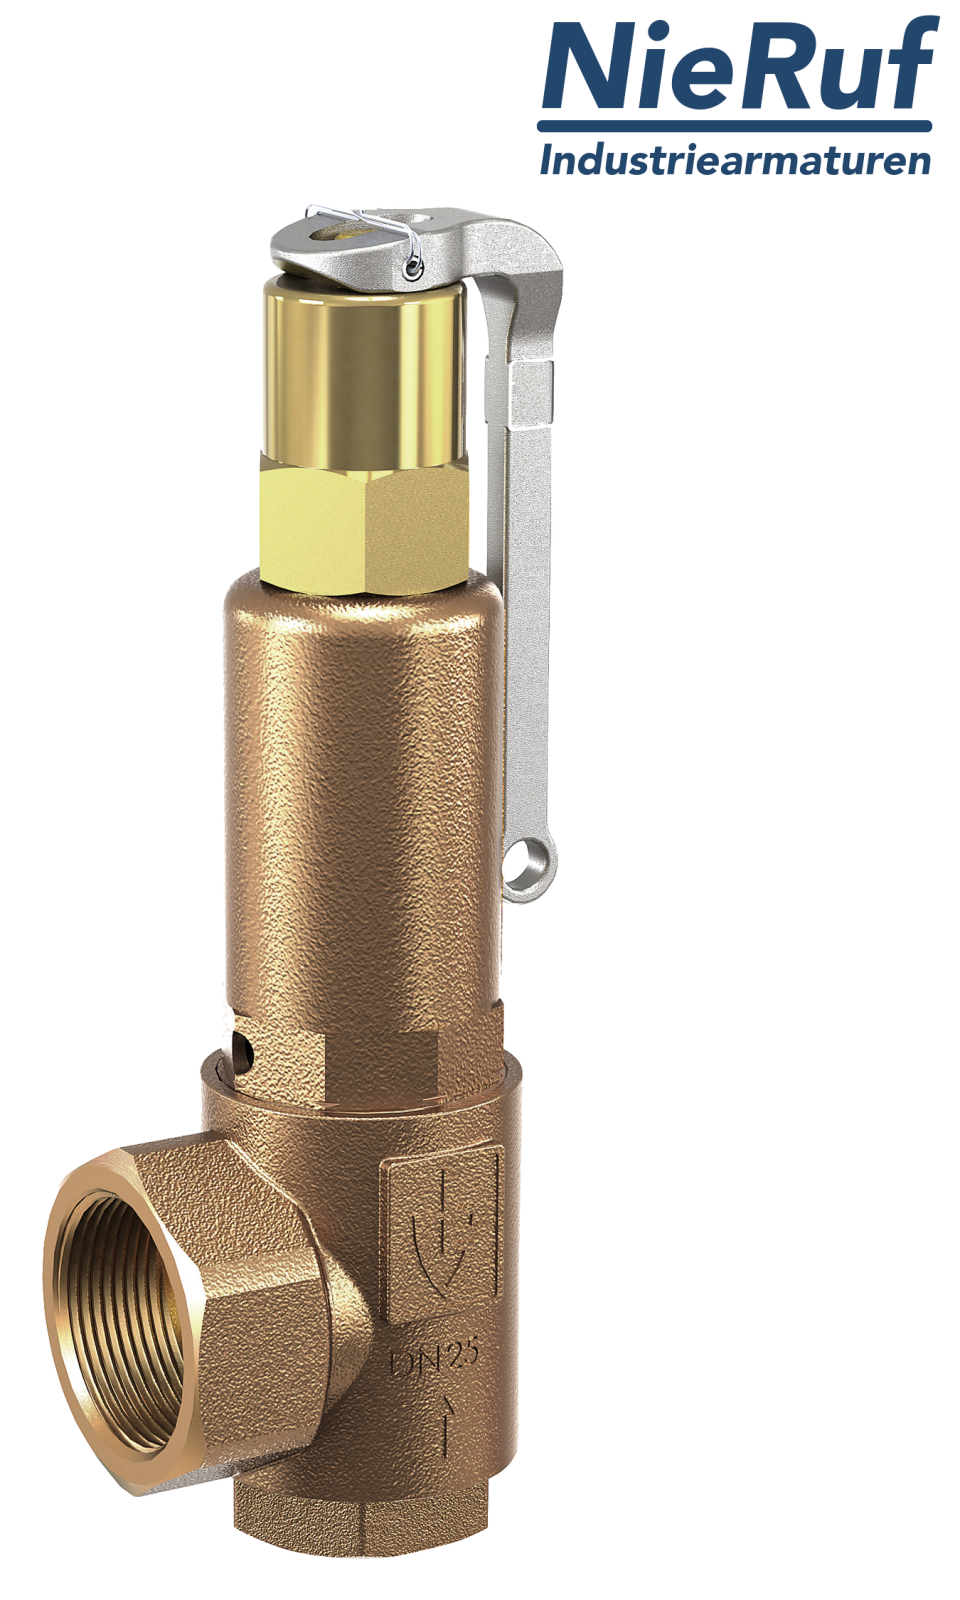 safety valve 2" x 2" fm SV03 neutral liquid media, gunmetal PTFE, with lever